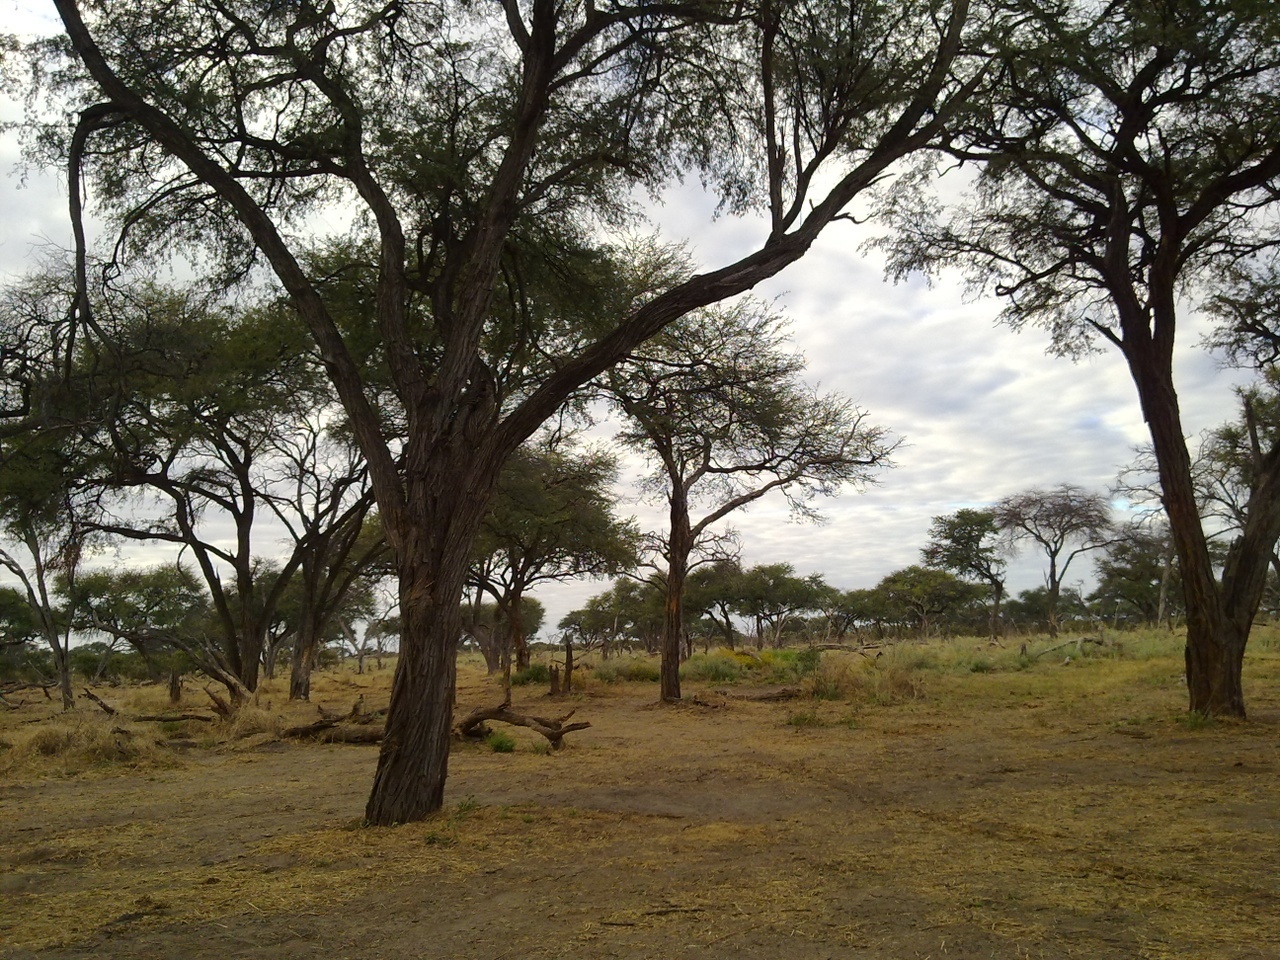 Magotho Camp, Moremi Game Reserve, Botswana